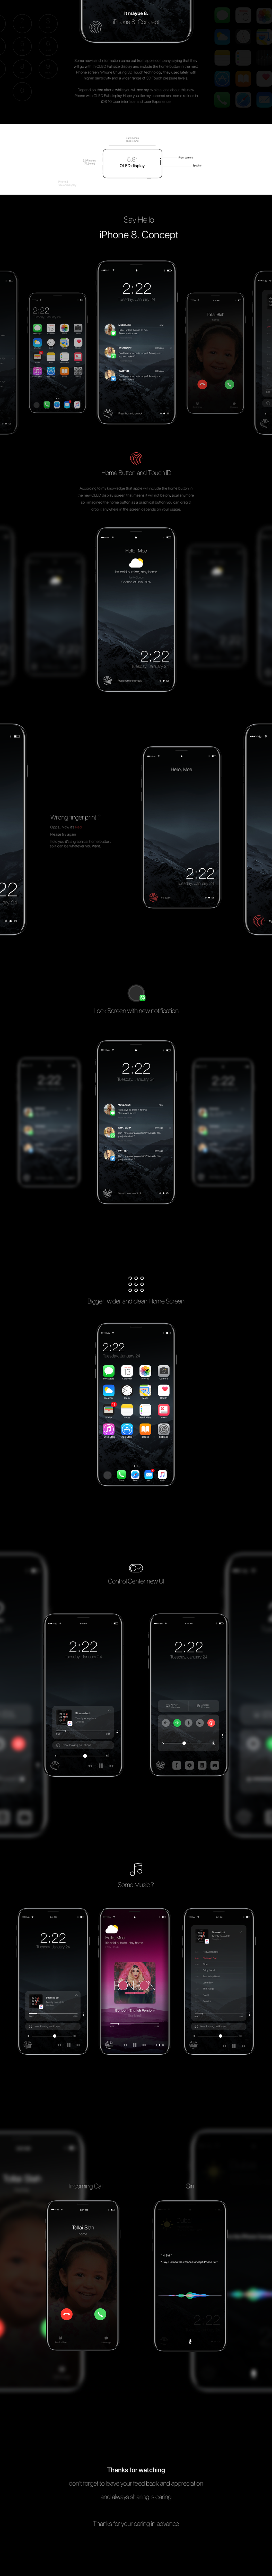 iPhone-8-Konzept-Dunkelmodus